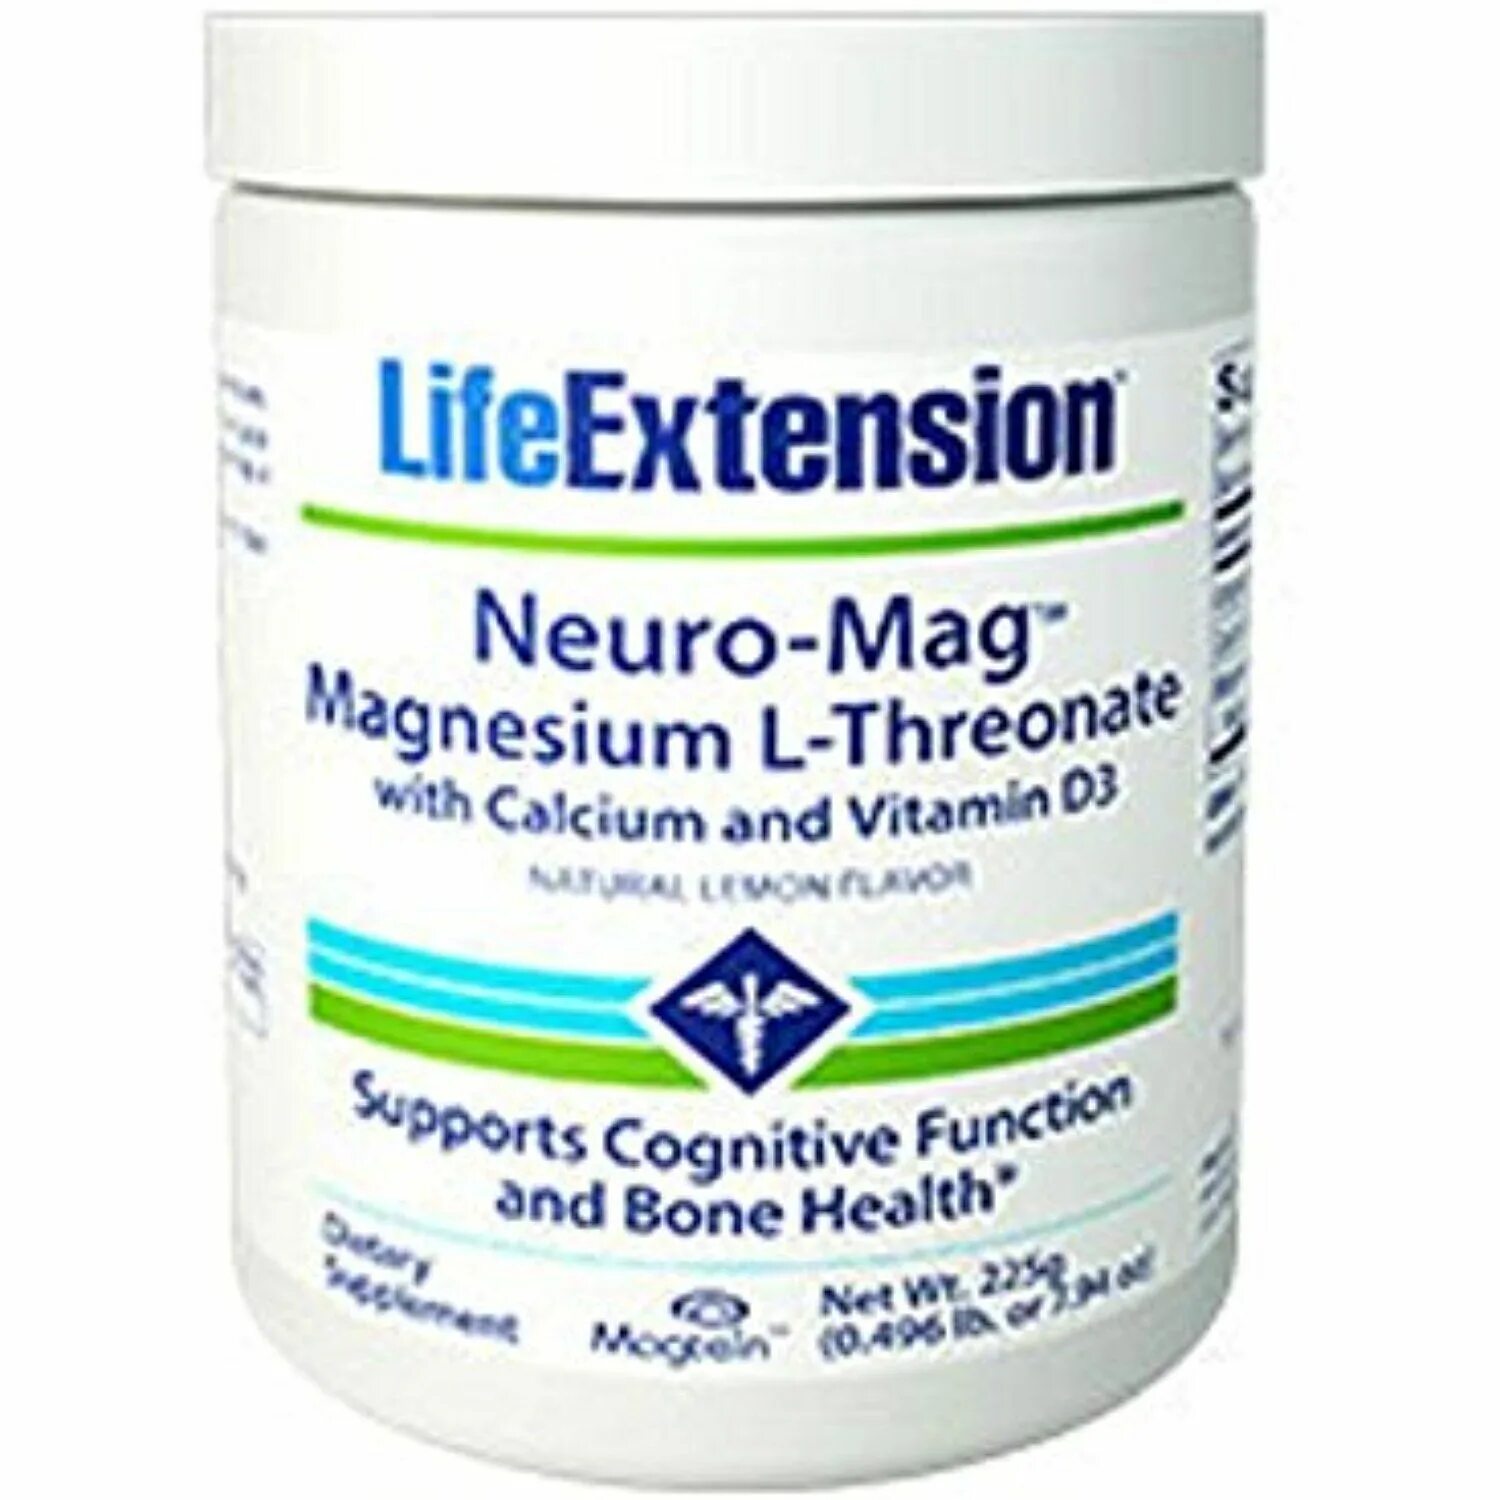 Магний life extension. Life Extension магний л треонат. Магний Нейро маг. Нейро магний Life Extension. Магнезиум l-Threonate.